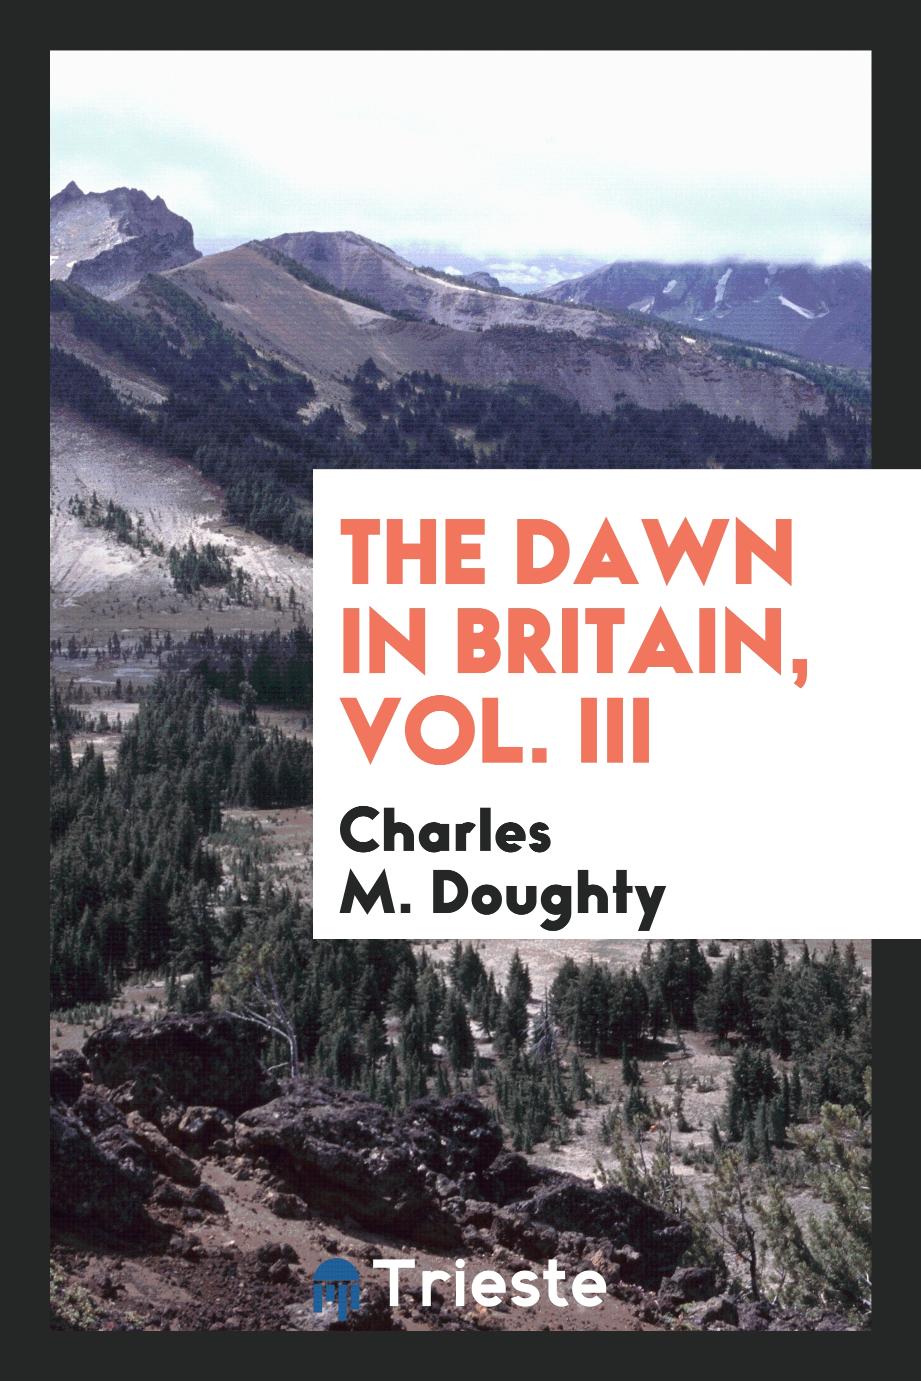 The dawn in Britain, Vol. III